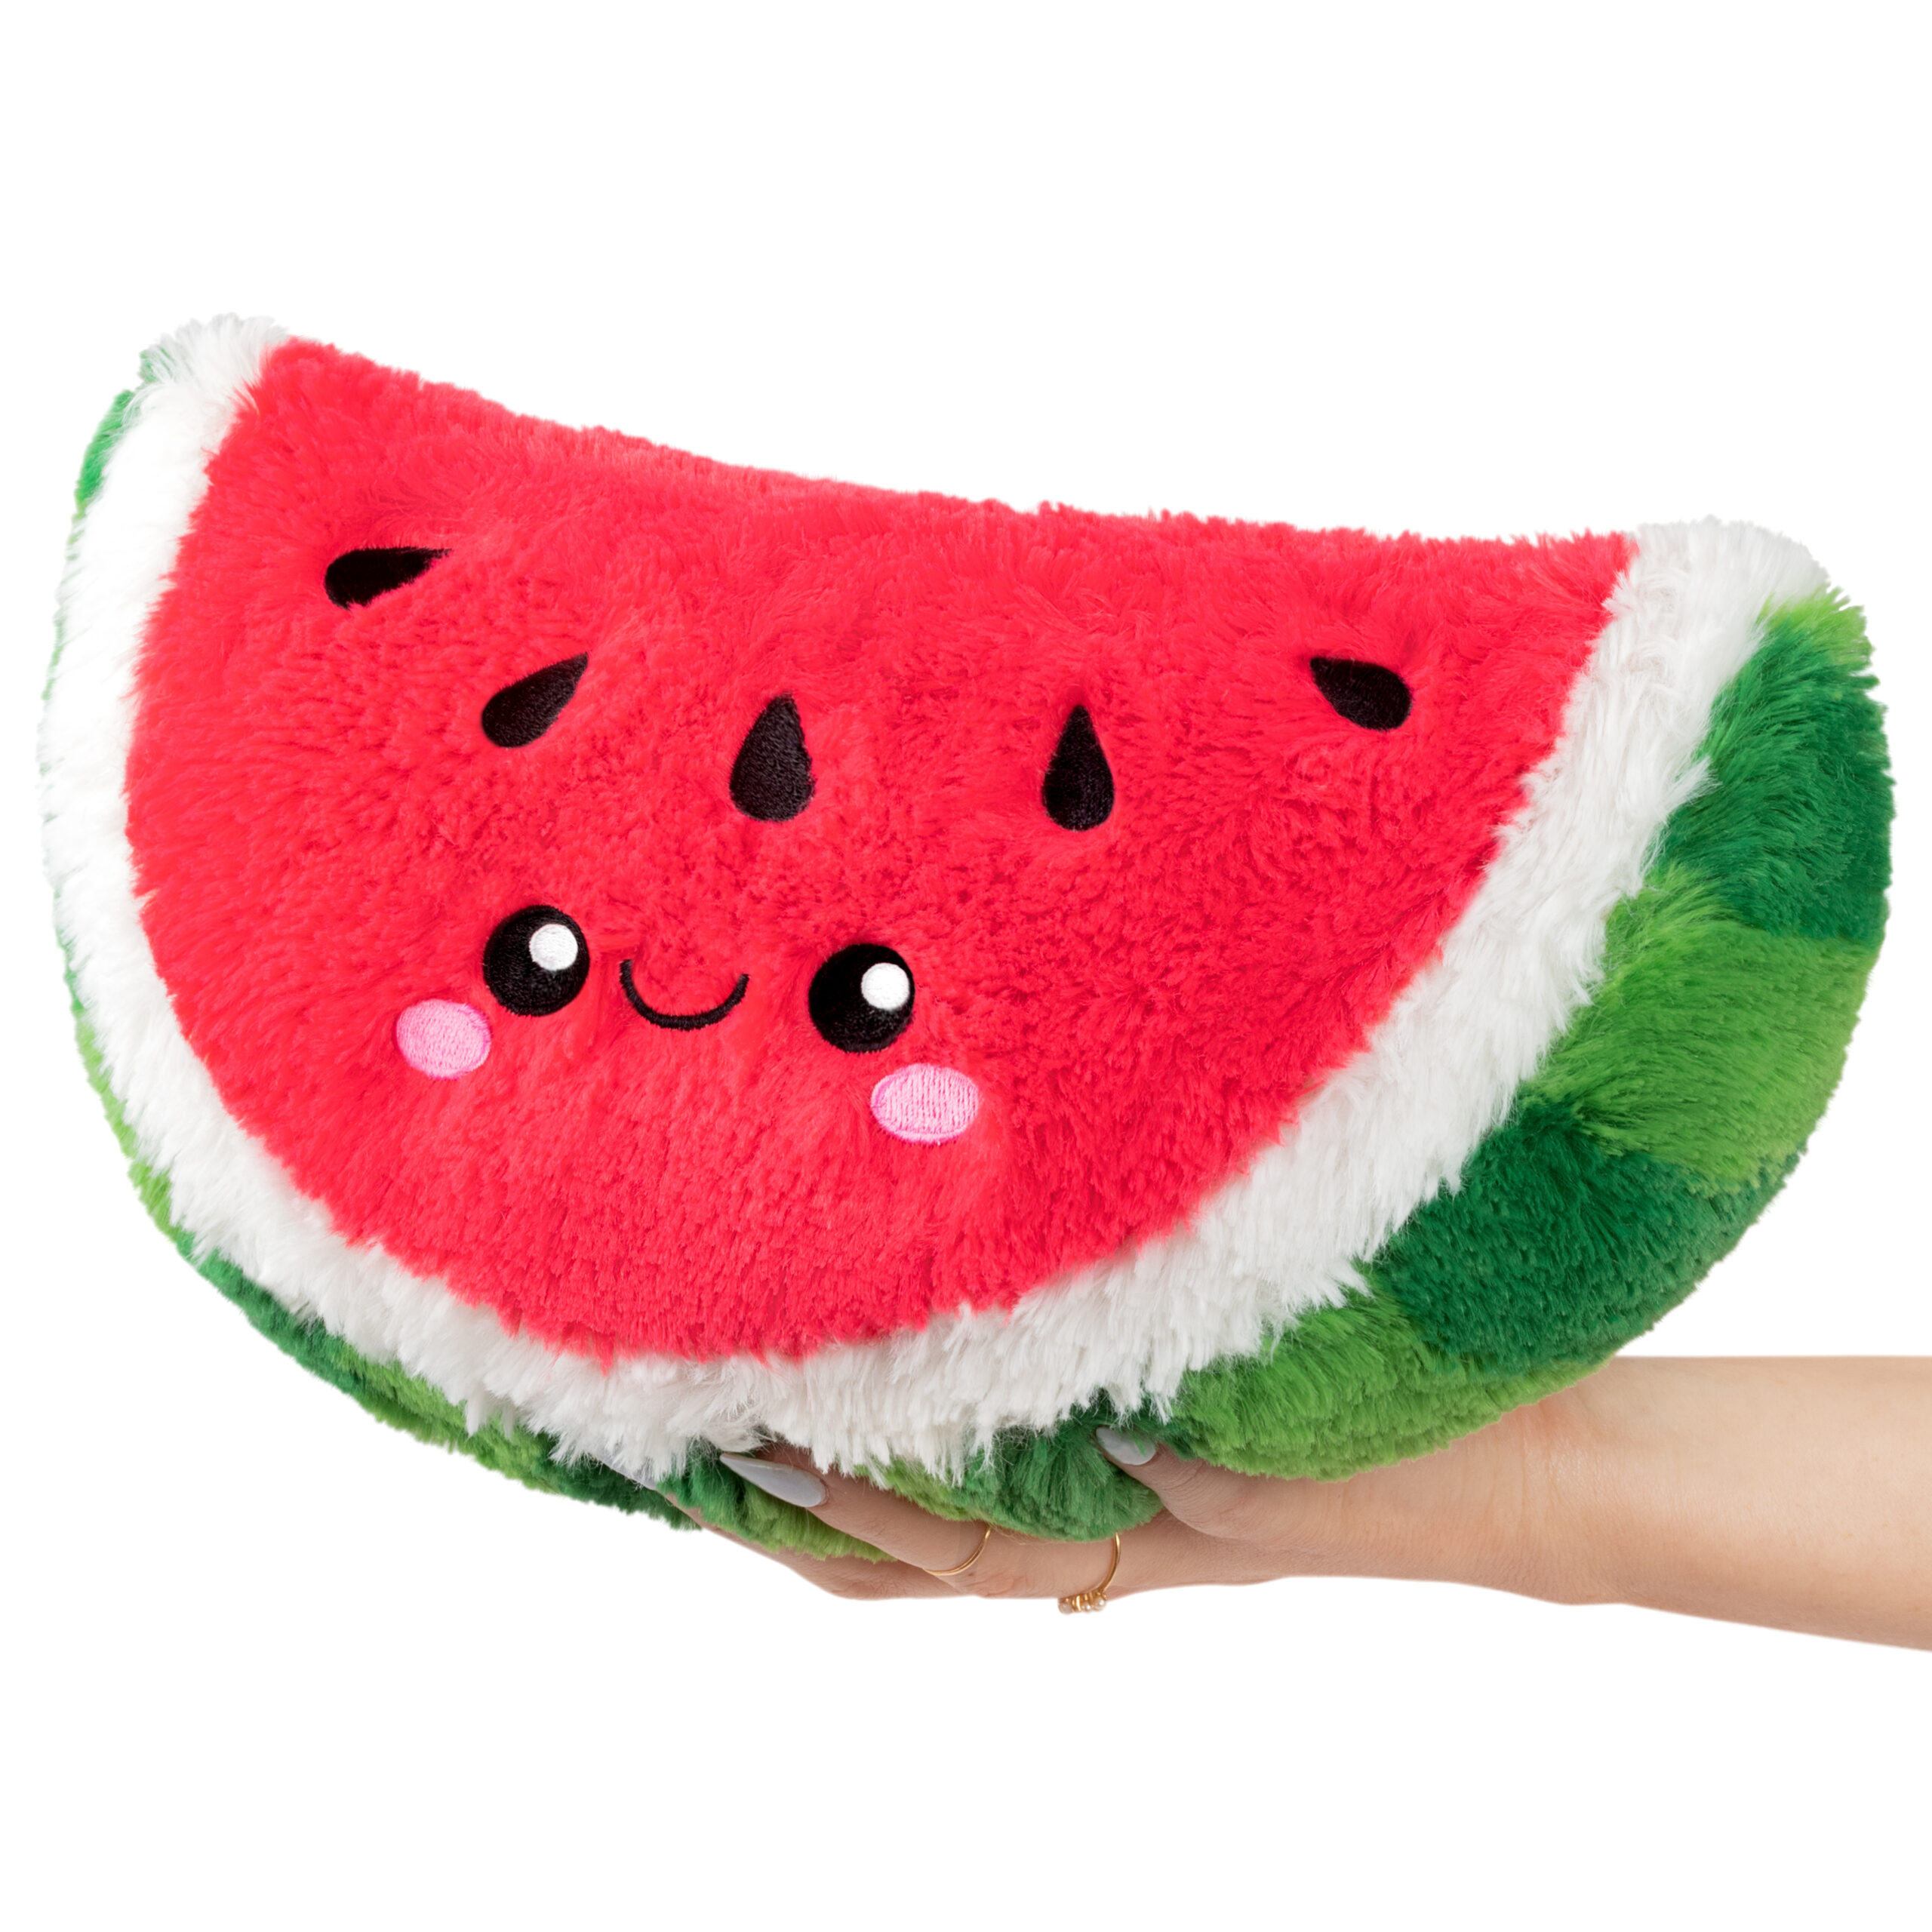 Hand holding Mini Comfort Food Watermelon